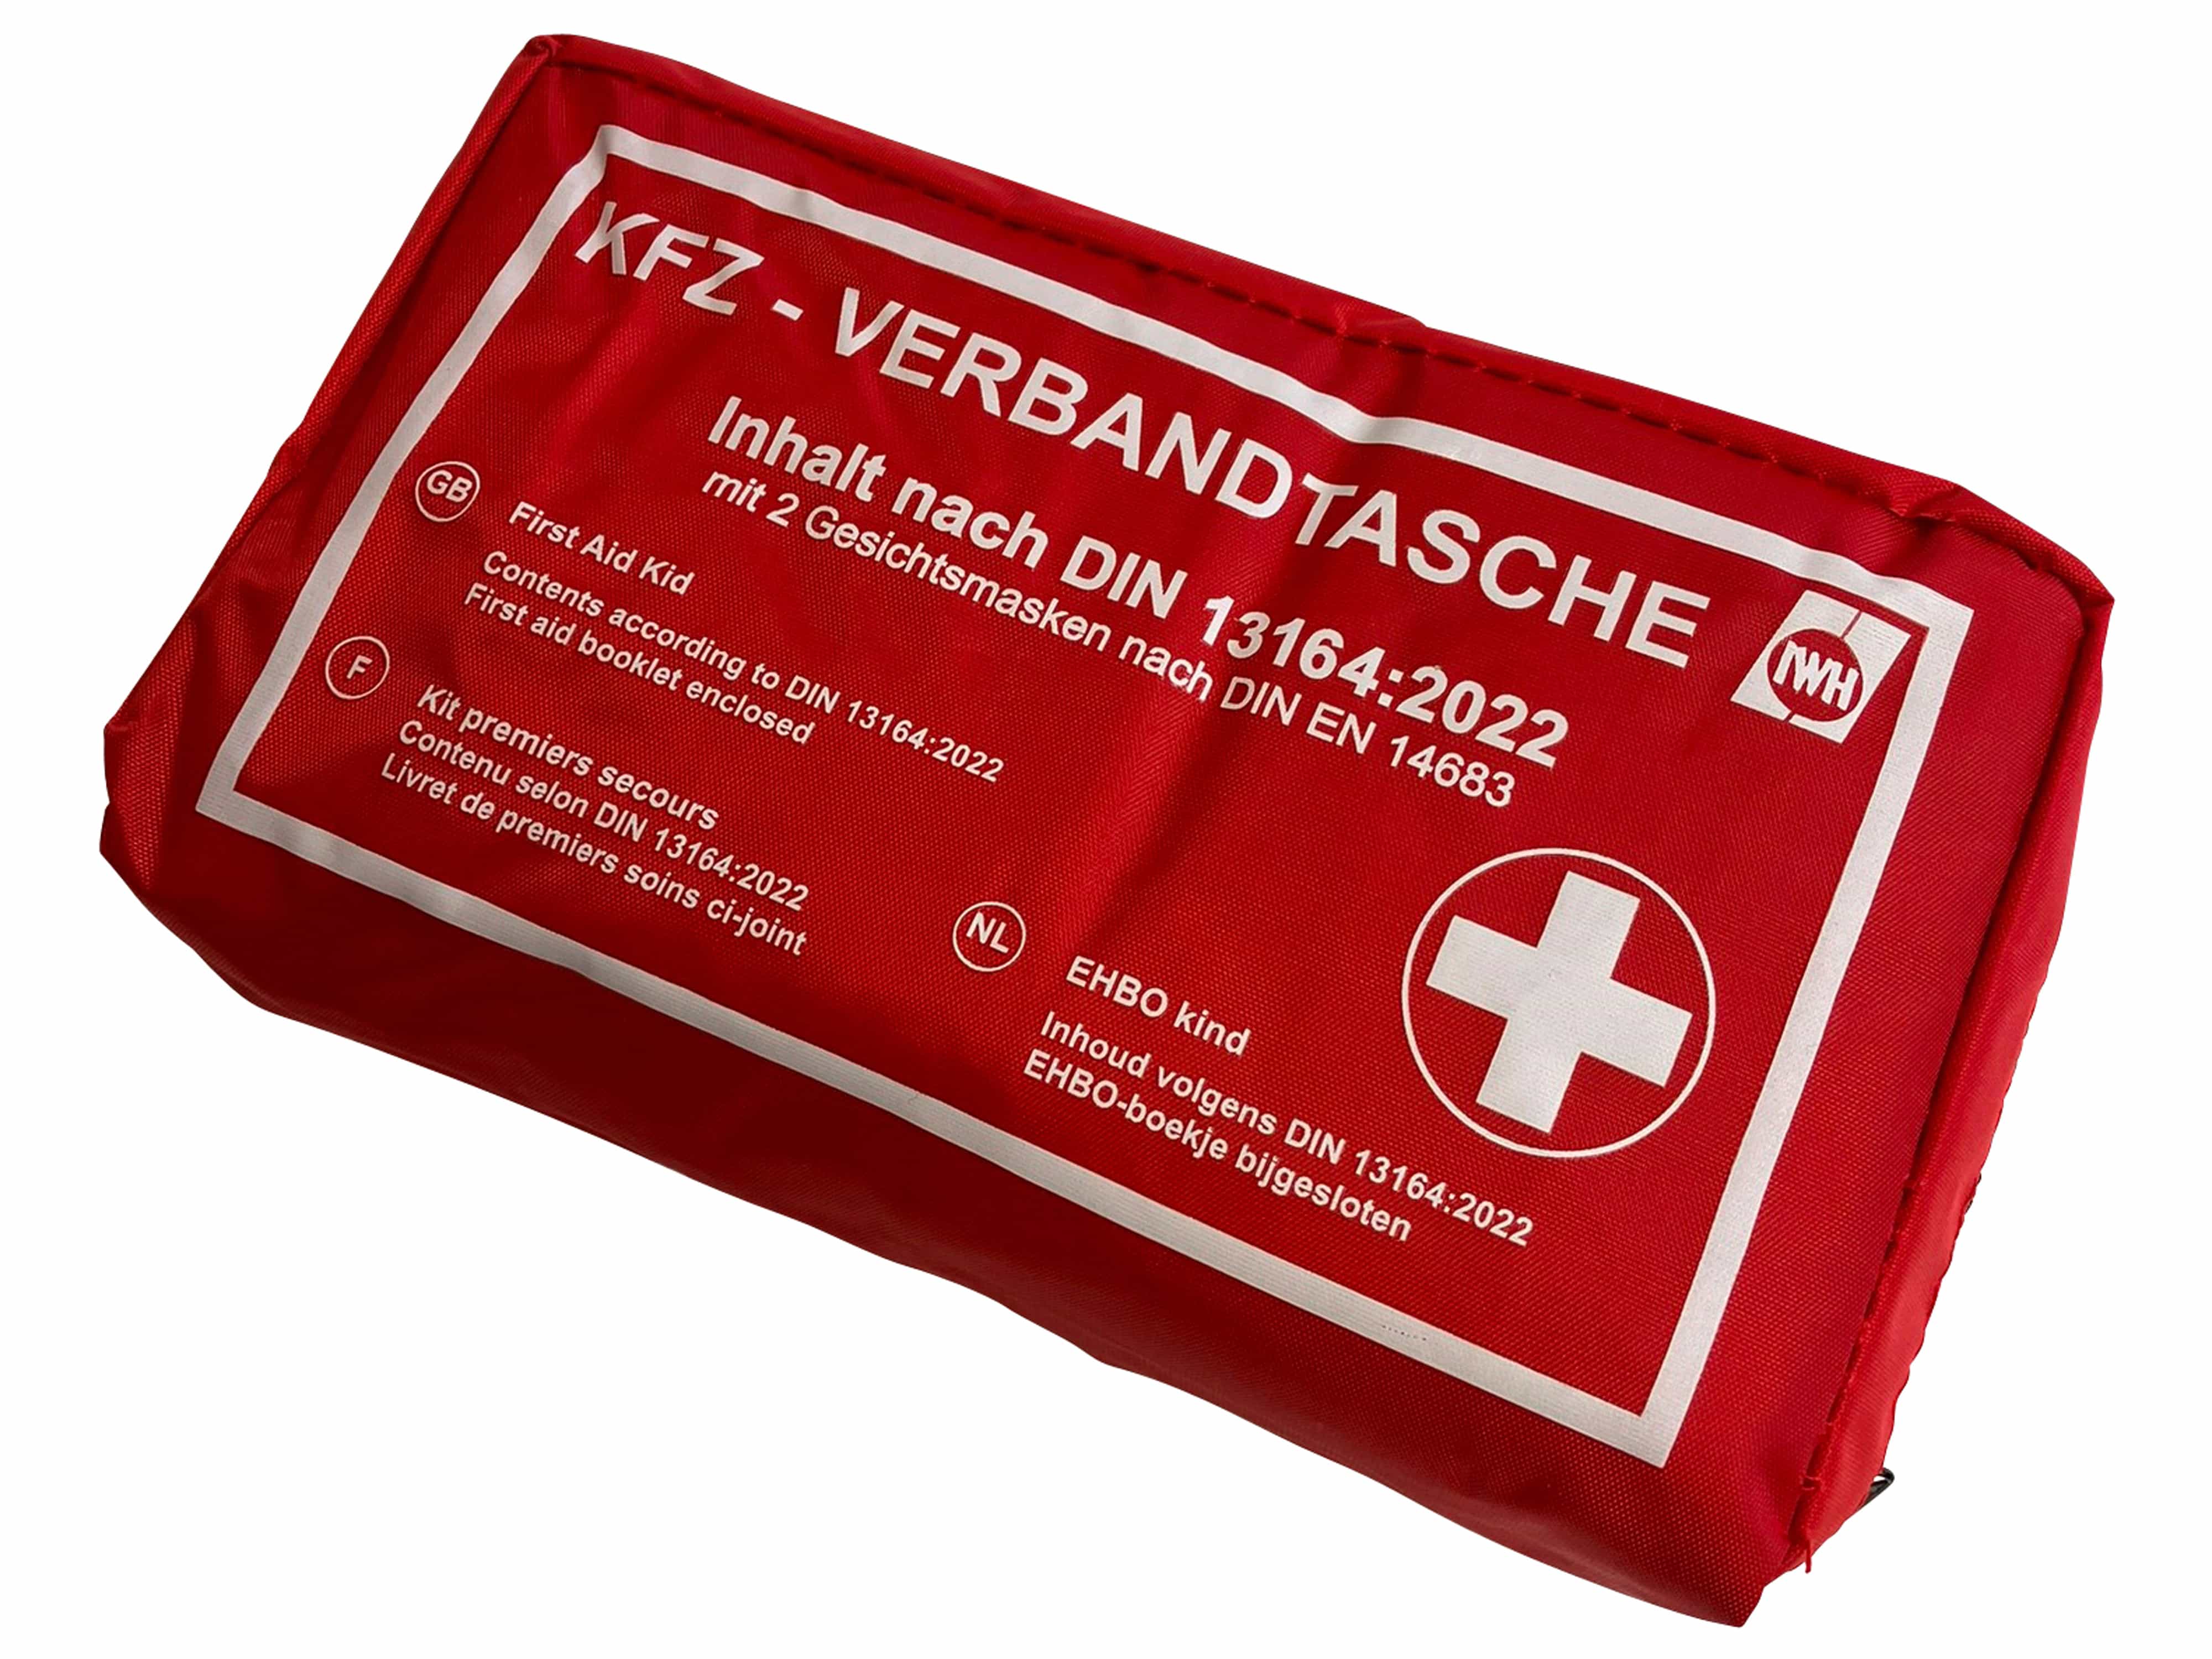 IWH KFZ-Verbandstasche 023511, rot, DIN 131064:2022